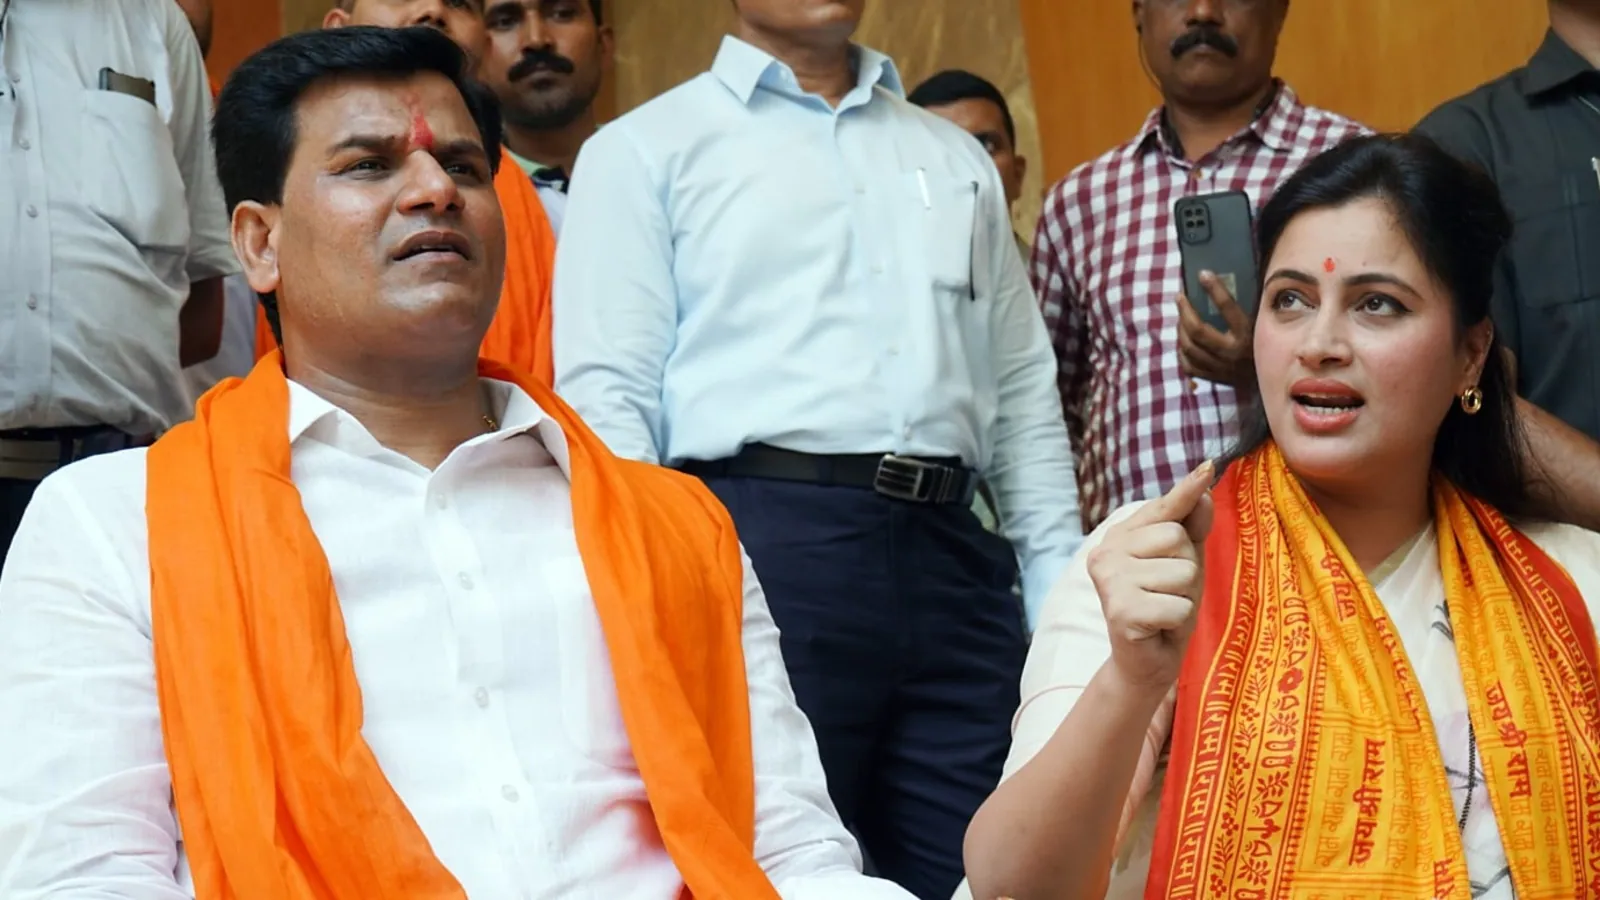 On Hanuman Chalisa row, Shiv Sena attacks BJP: ‘Hindutva culture, not chaos’